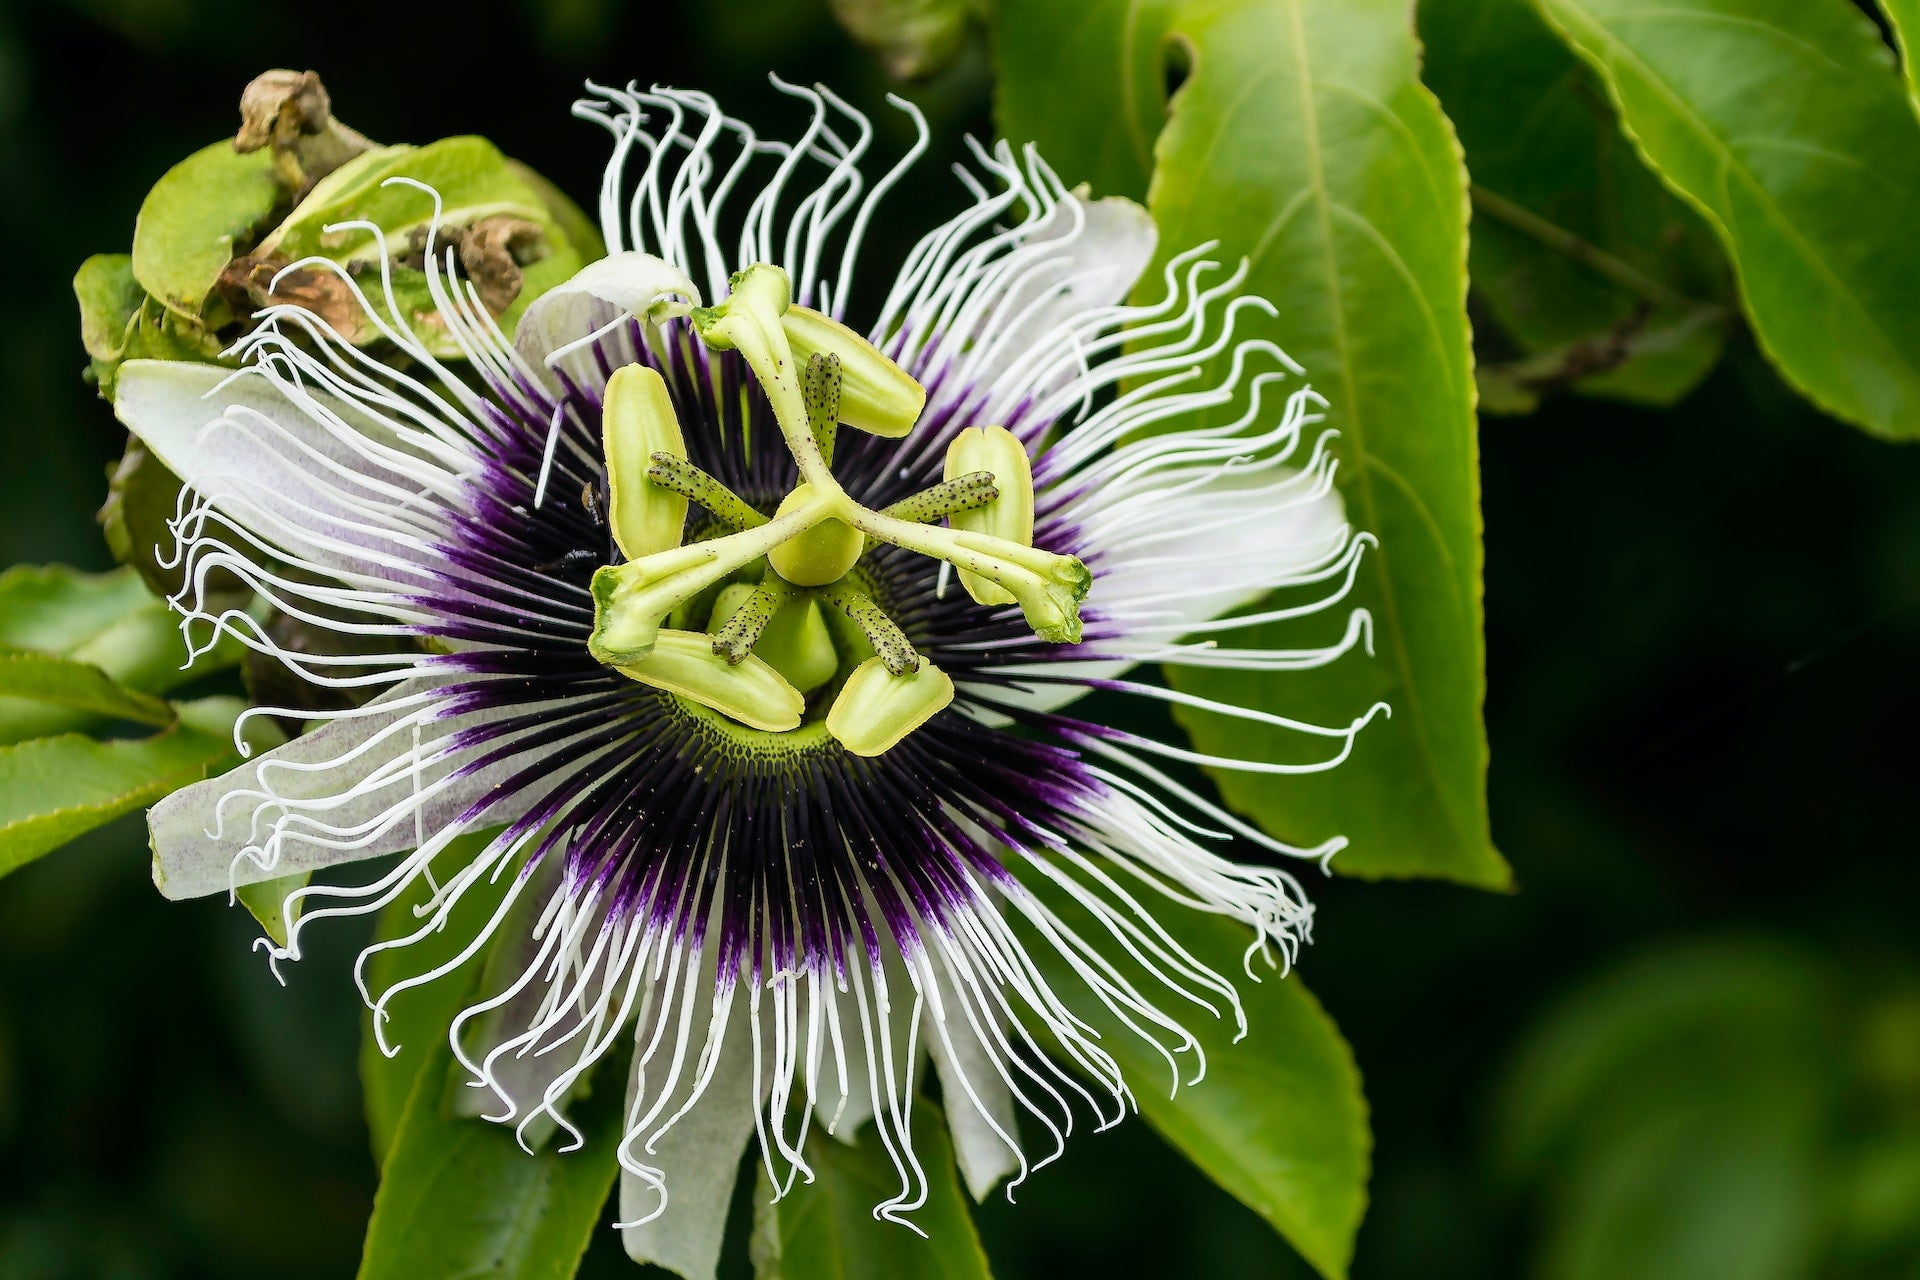 The maracuya passion fruit flower in bloom